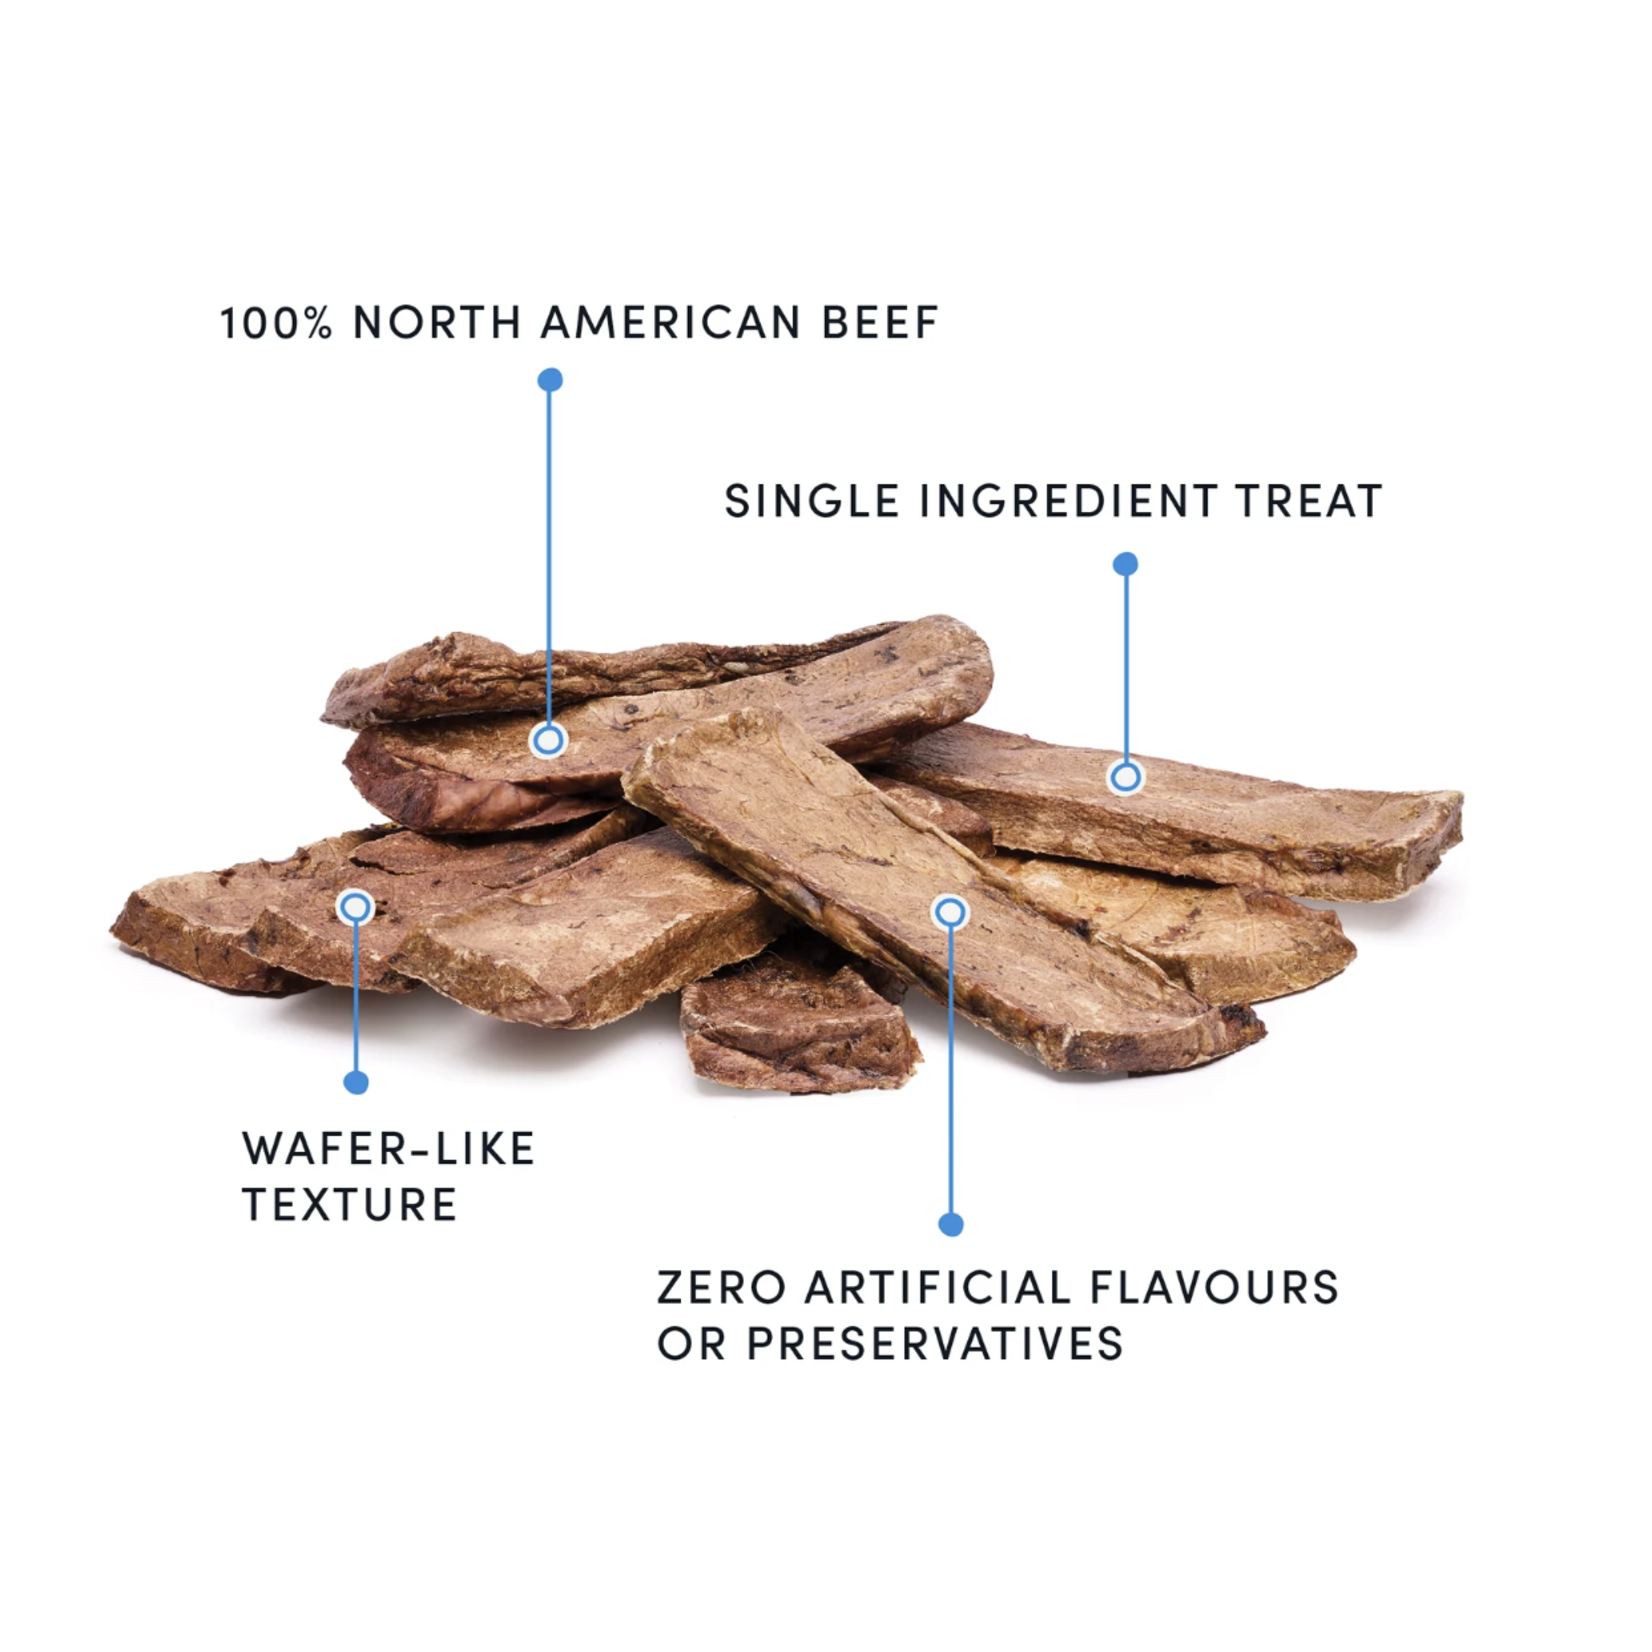 Crumps' Naturals Crumps’ Naturals: Beef Lung Tendersticks